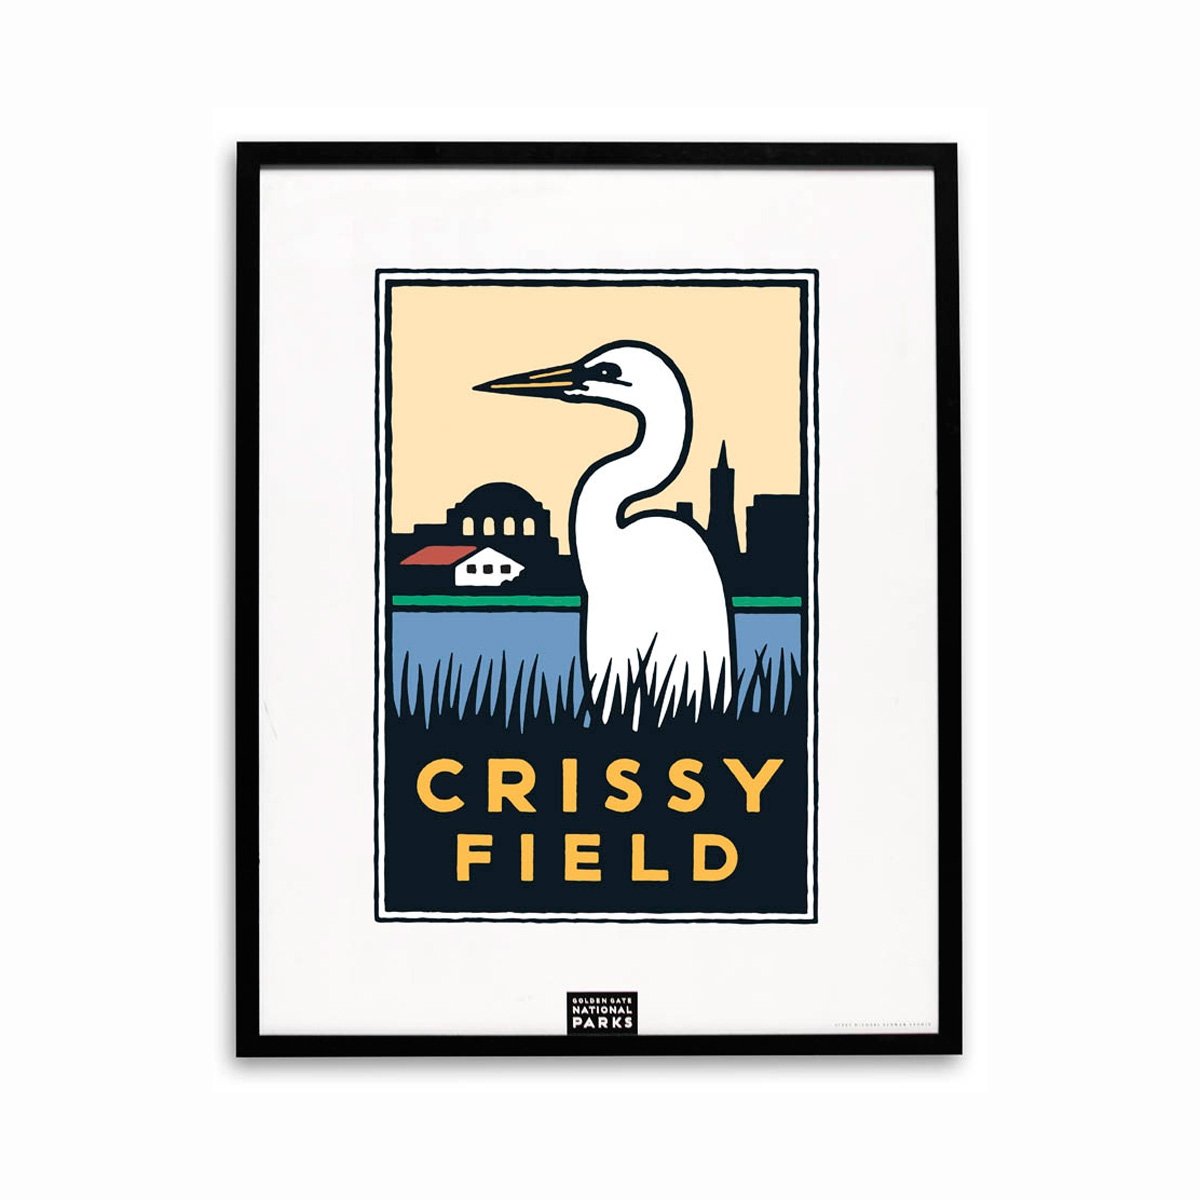 Framed 22 x 28 inch Crissy Field silk-screened poster, art by Michael Schwab.